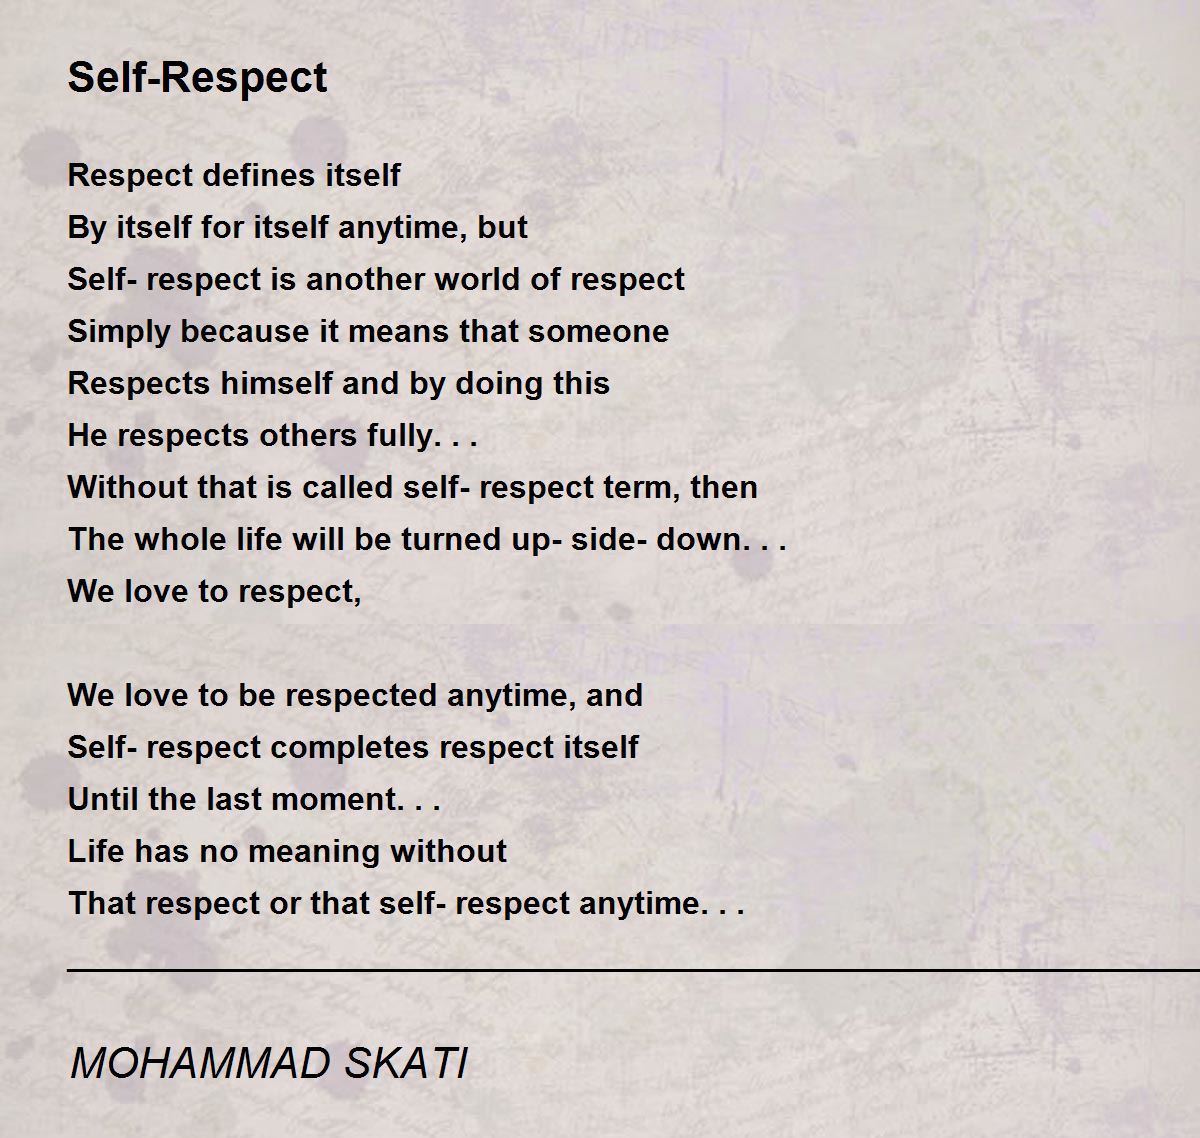 Self-Respect - Self-Respect Poem by MOHAMMAD SKATI